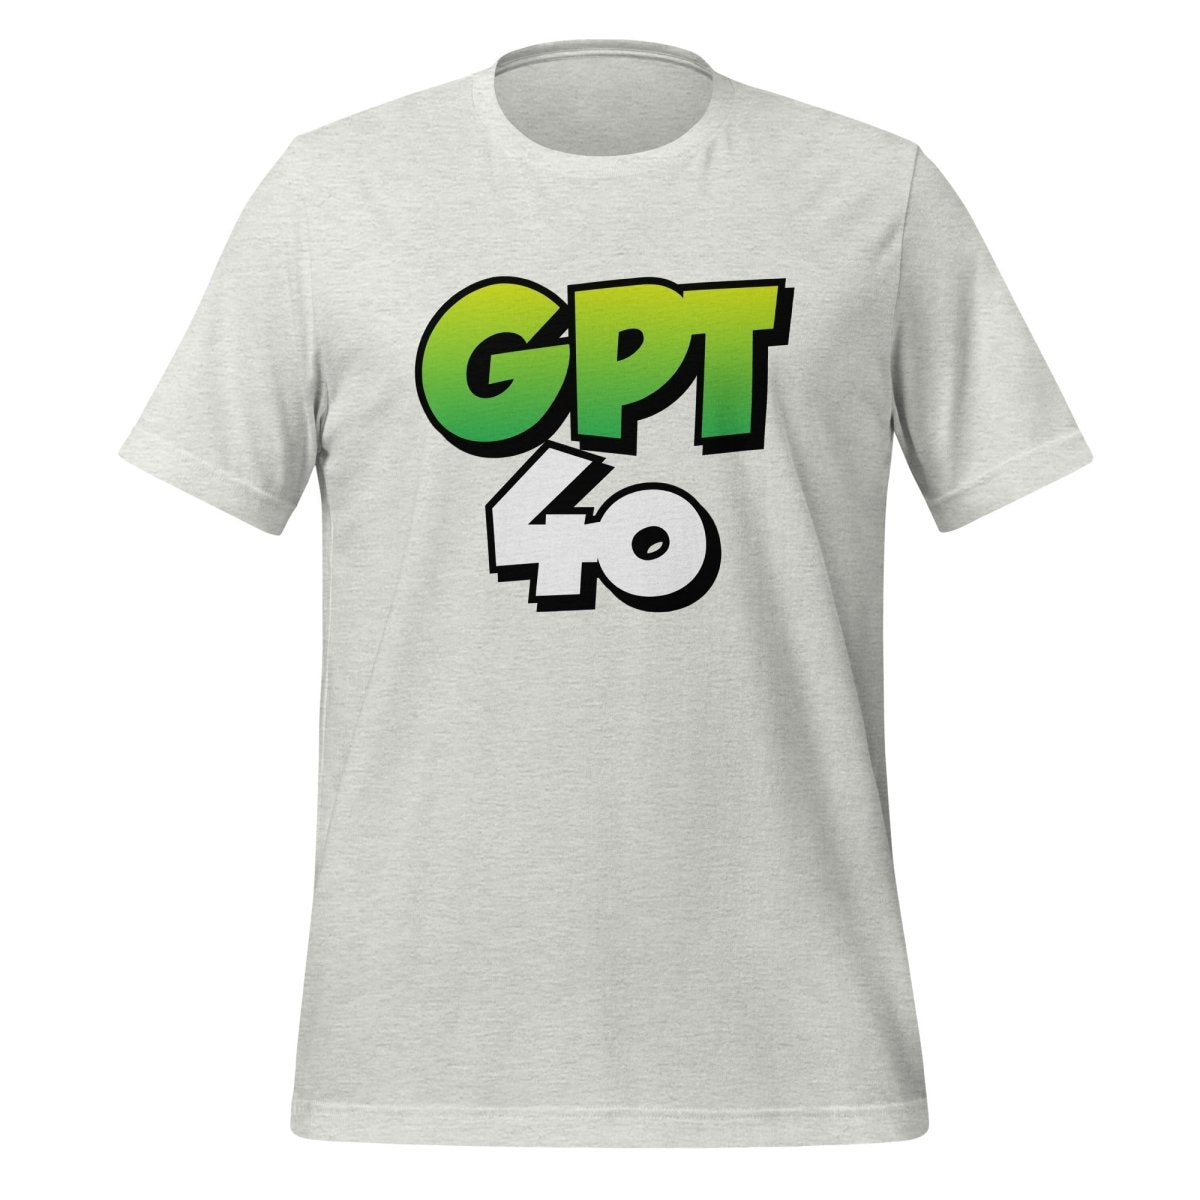 GPT 4o Ben 10 - Style T - Shirt (unisex) - Ash - AI Store